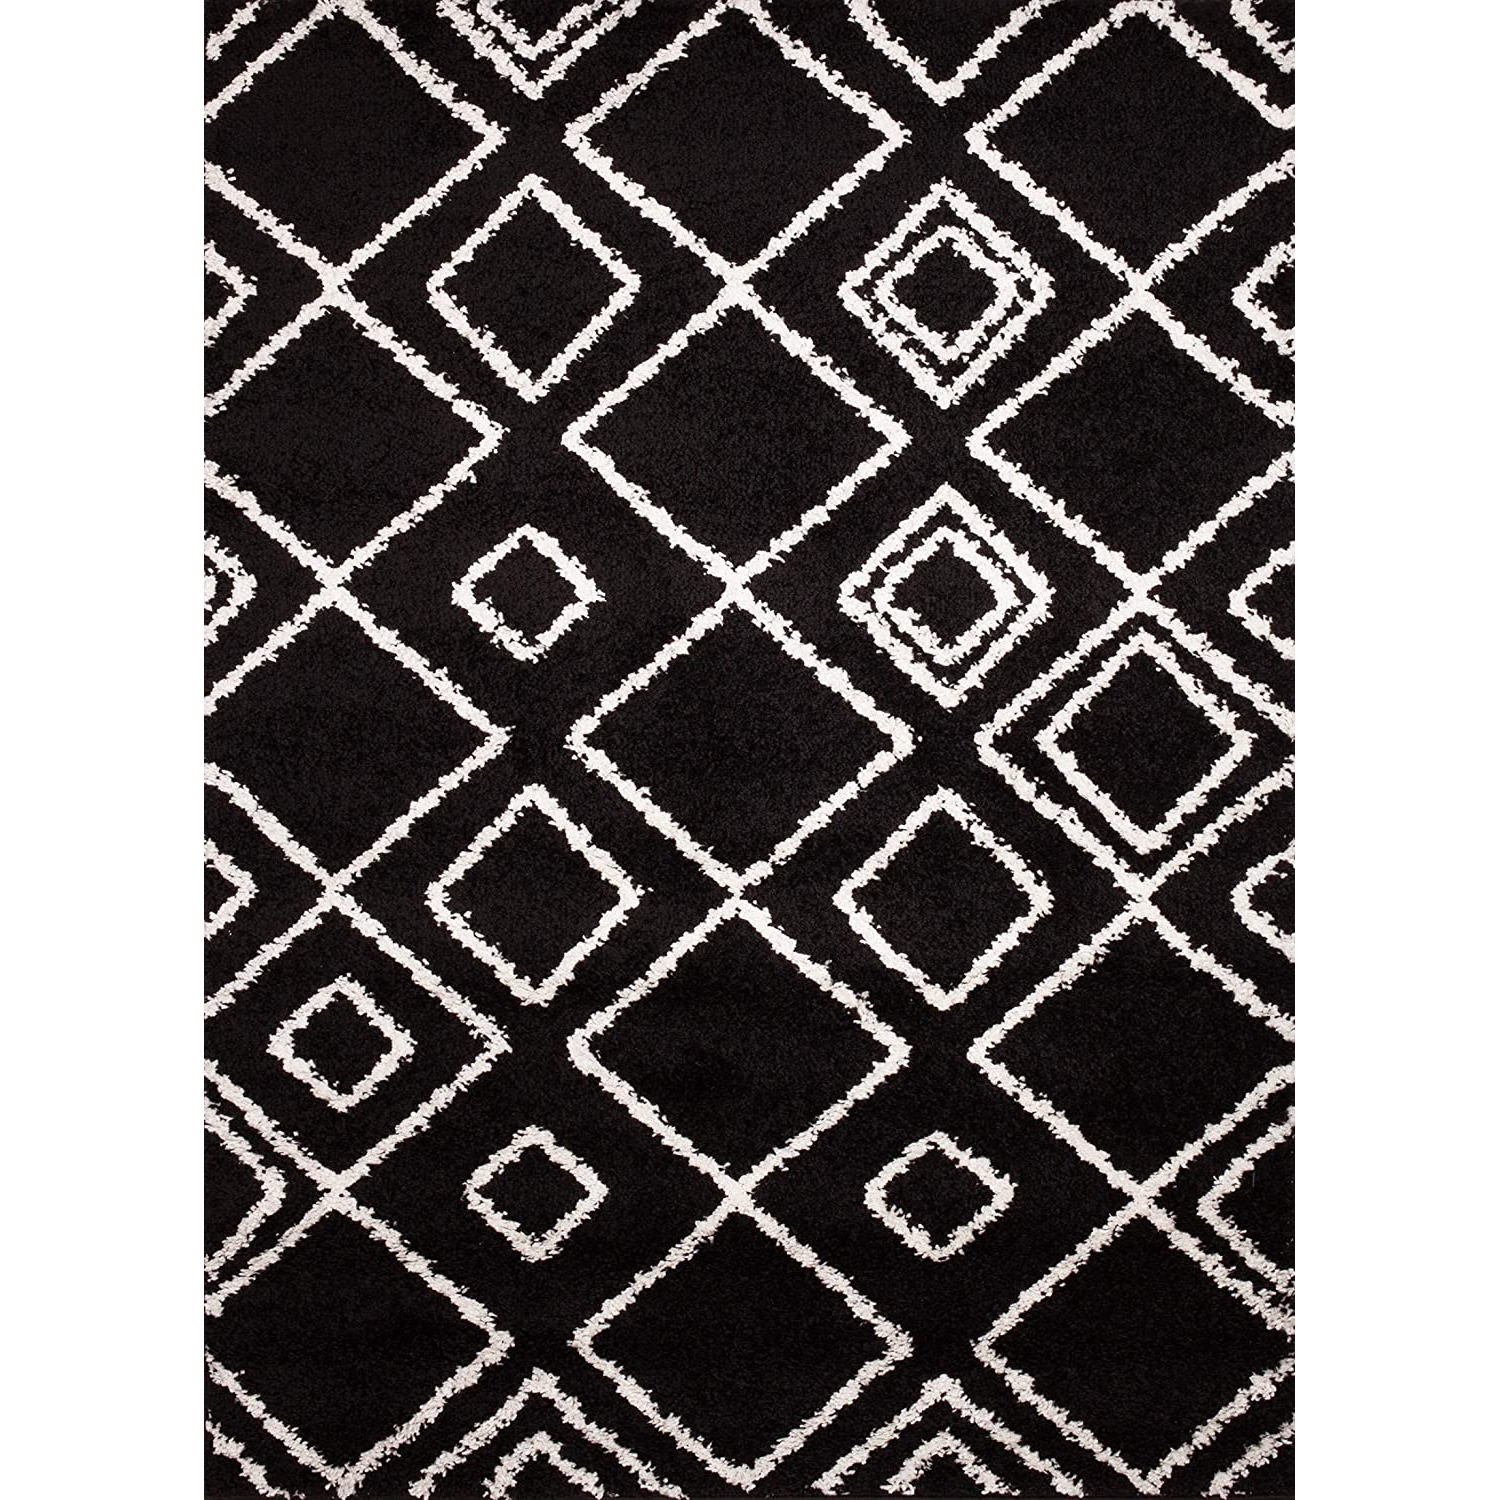 High Pile Area Rug for Living Room 33 x 5 Plush Black/White 3 x 5 JV Home Moroccan Trellis Shag Collection Soft